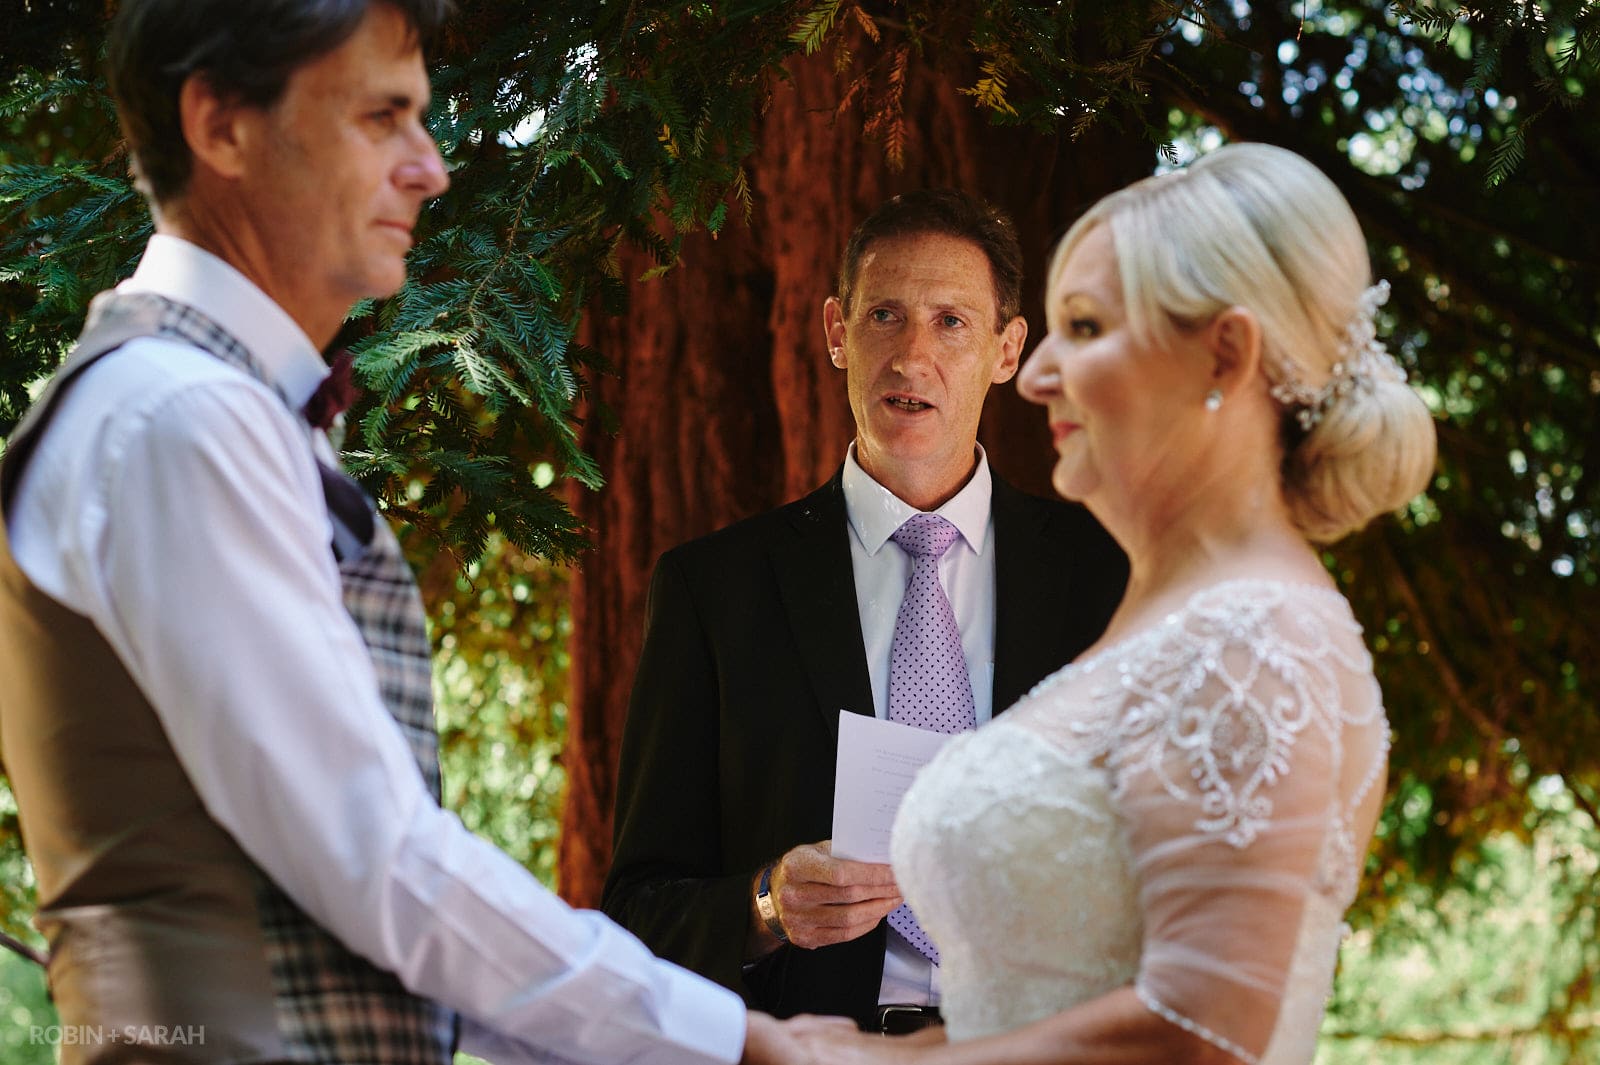 Wedding ceremony held outdoors under tree